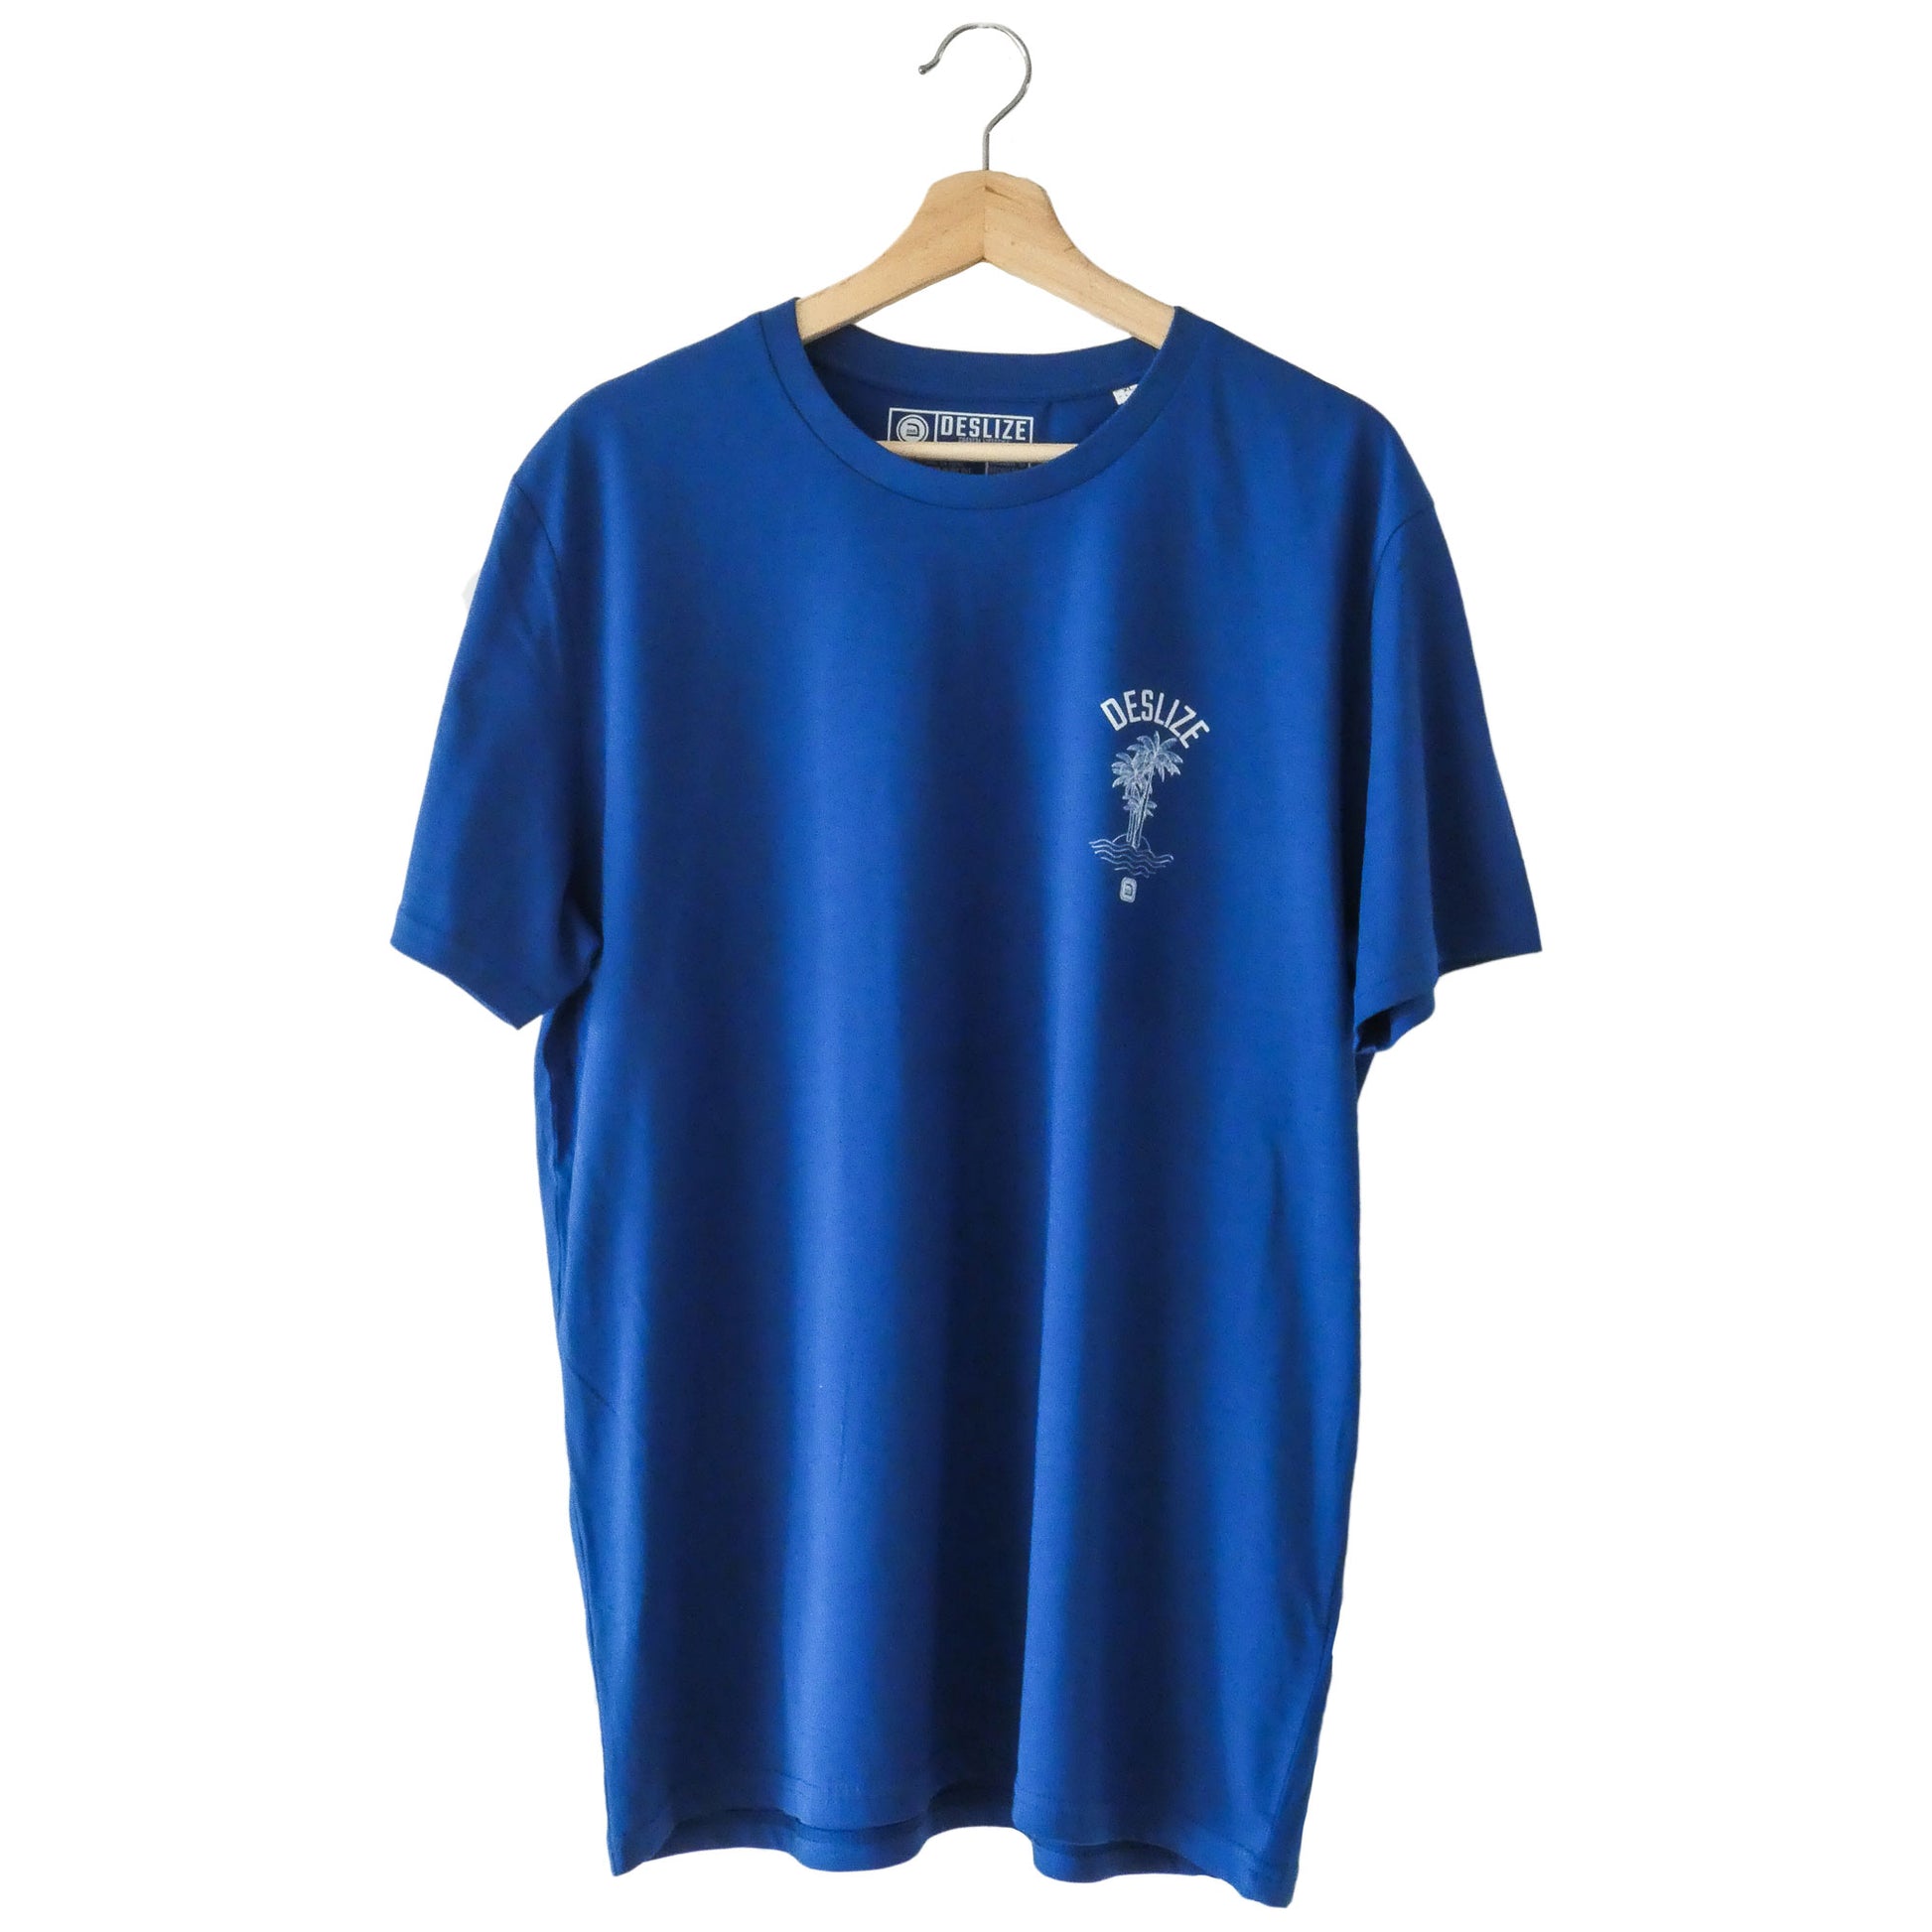 Supertubos blue tshirt, front side